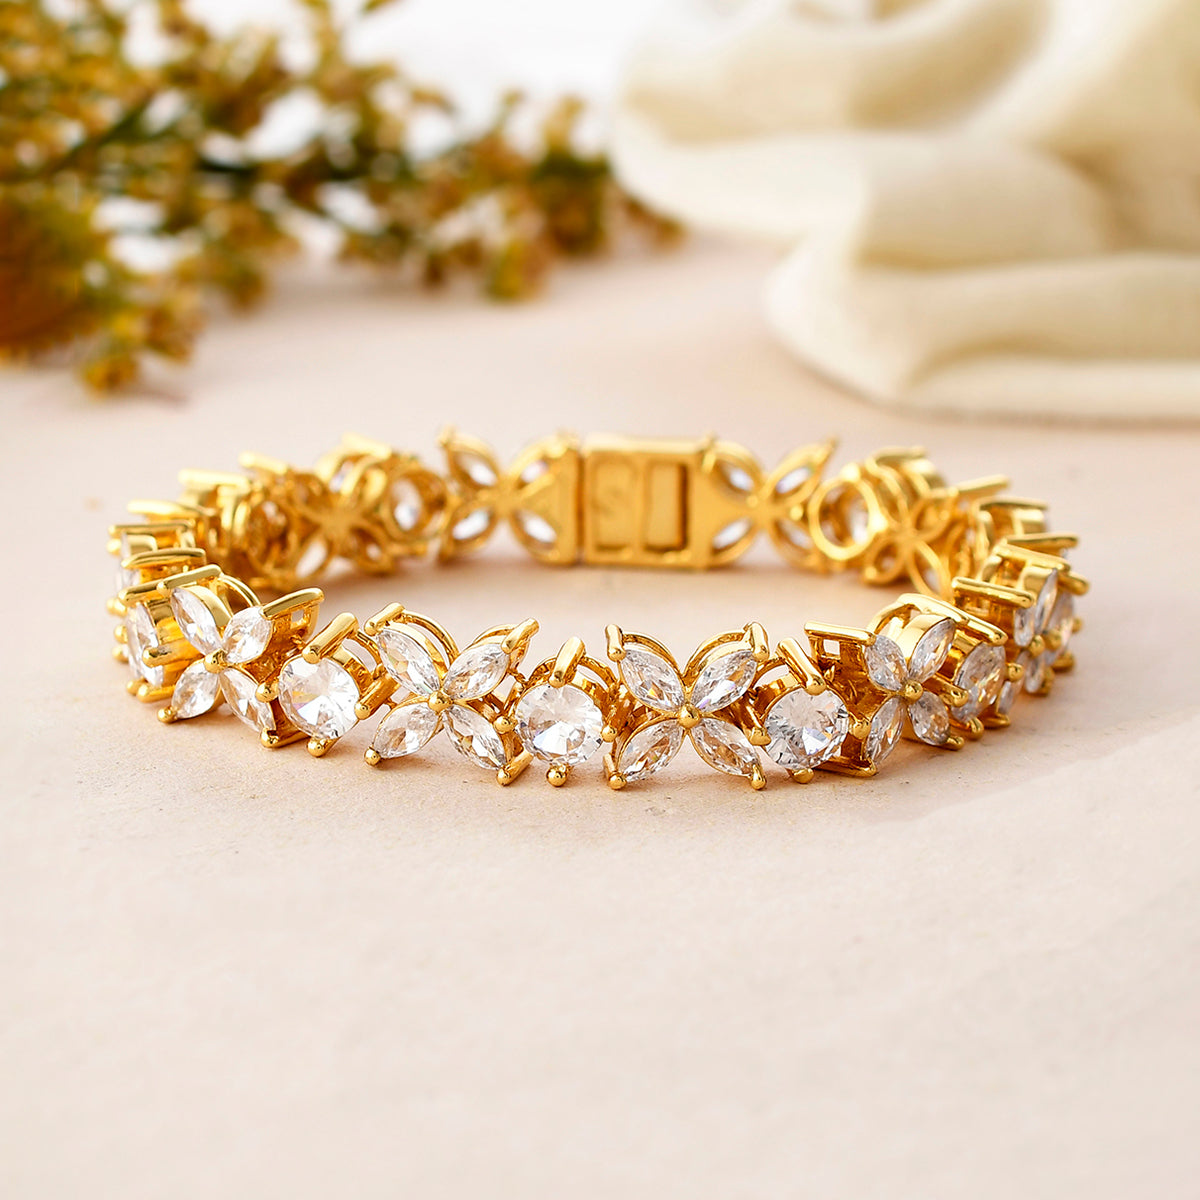 Elegant Ladies Fashion White Stone Bracelet Buy Online|Kollam supreme